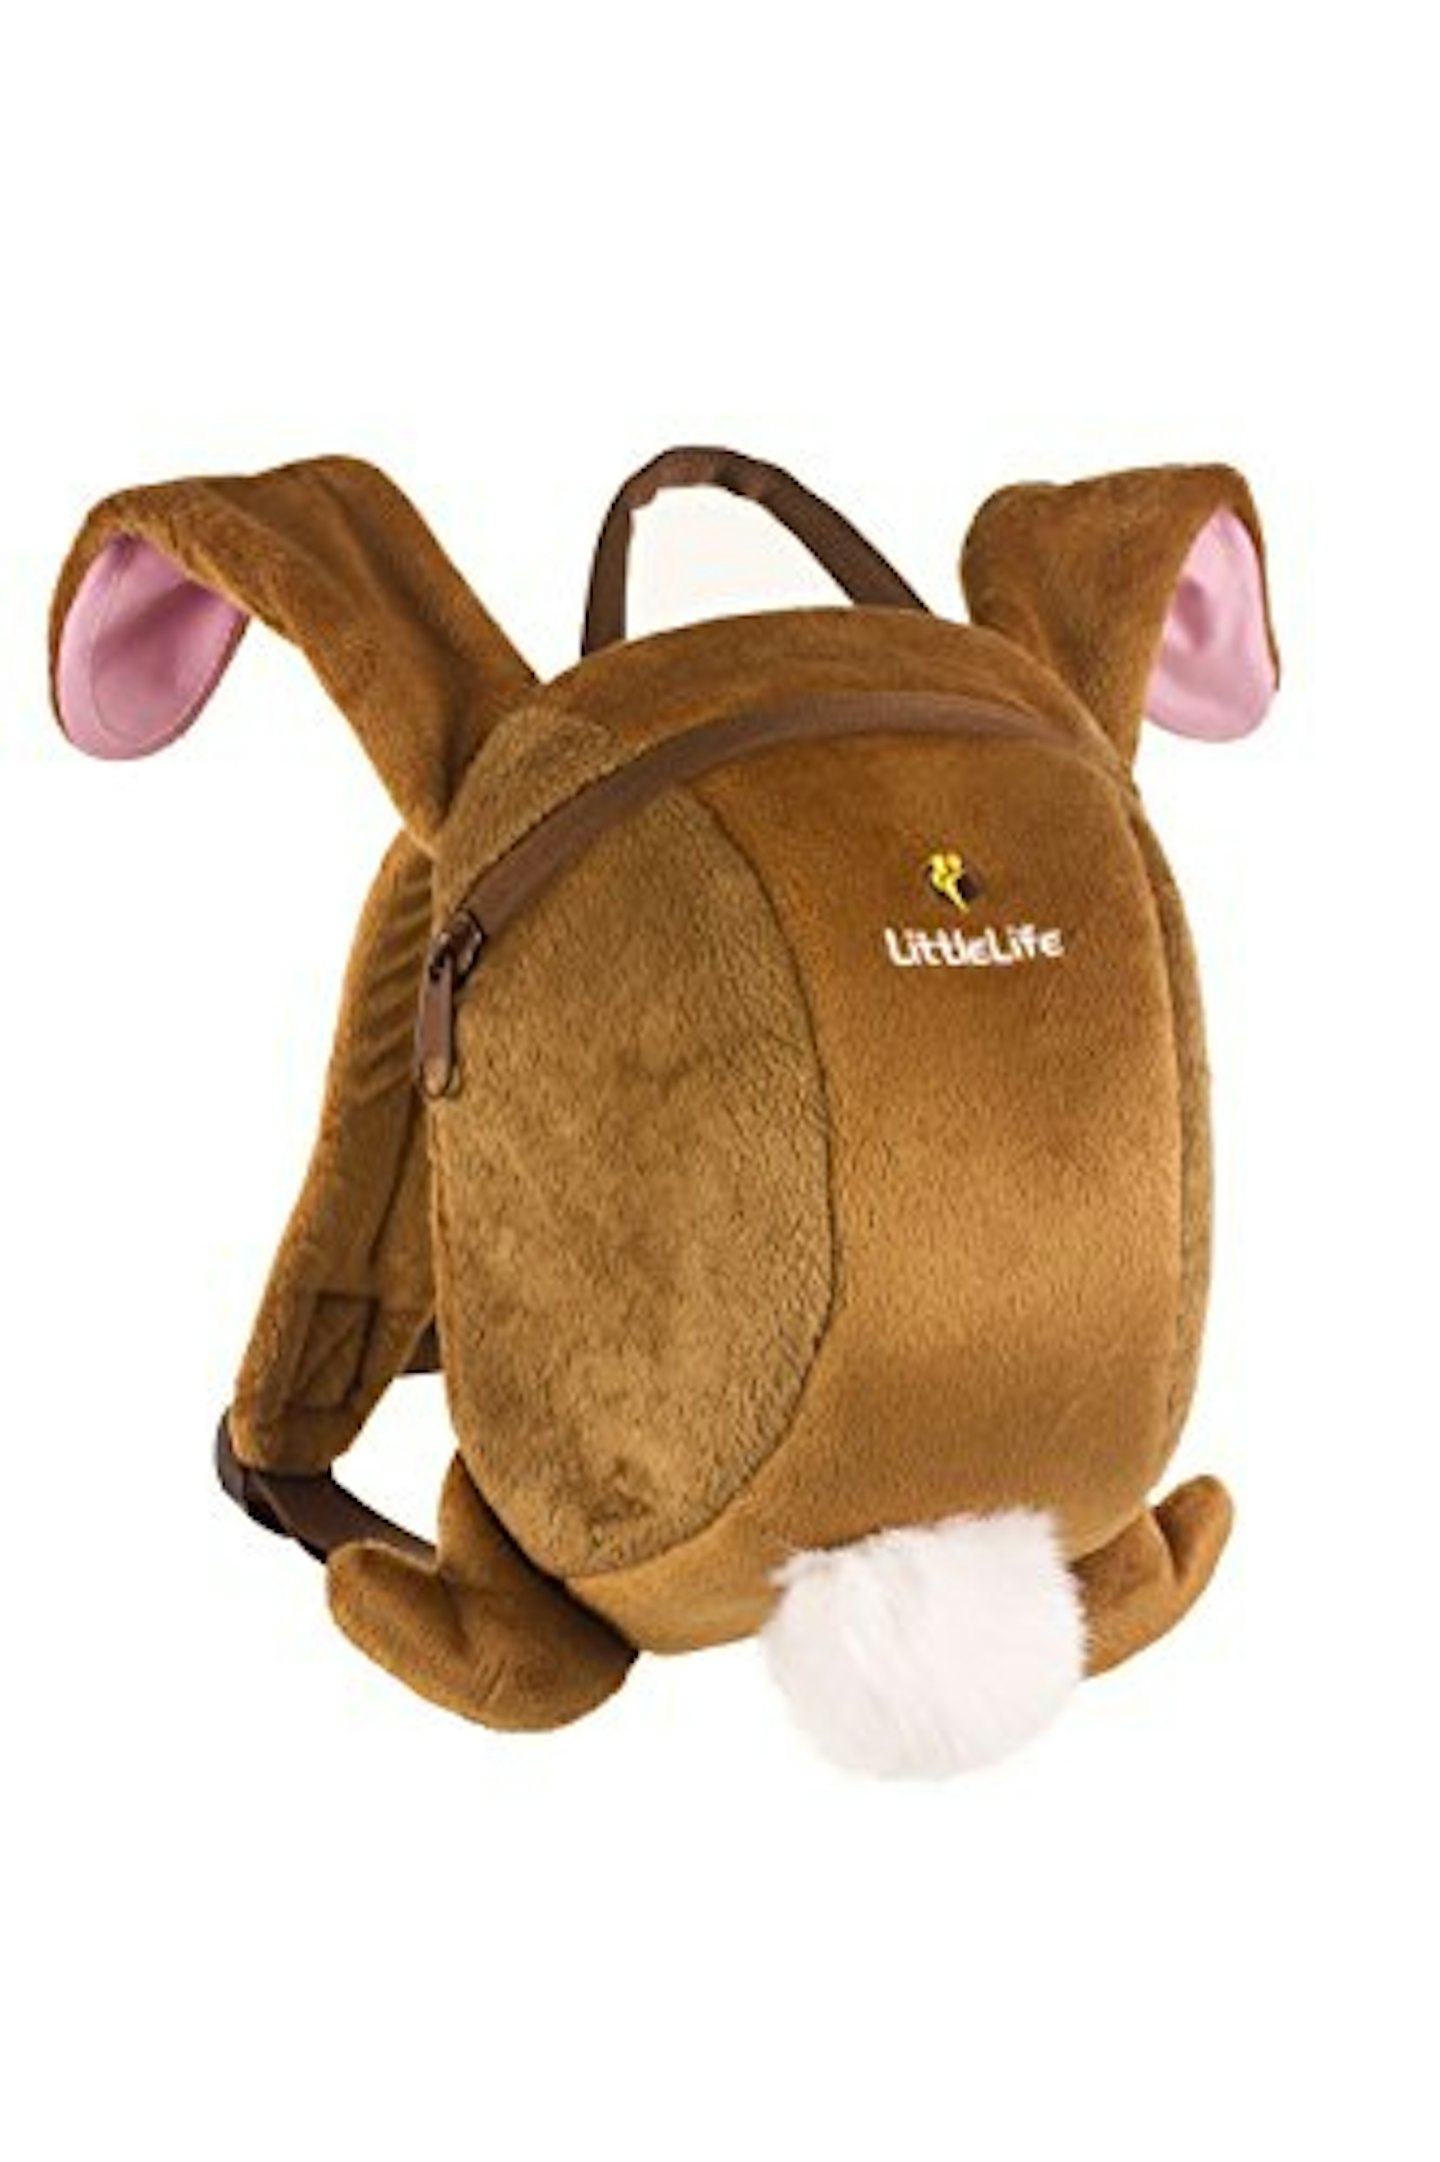 LittleLifeu2019s Bunny Toddler Backpack